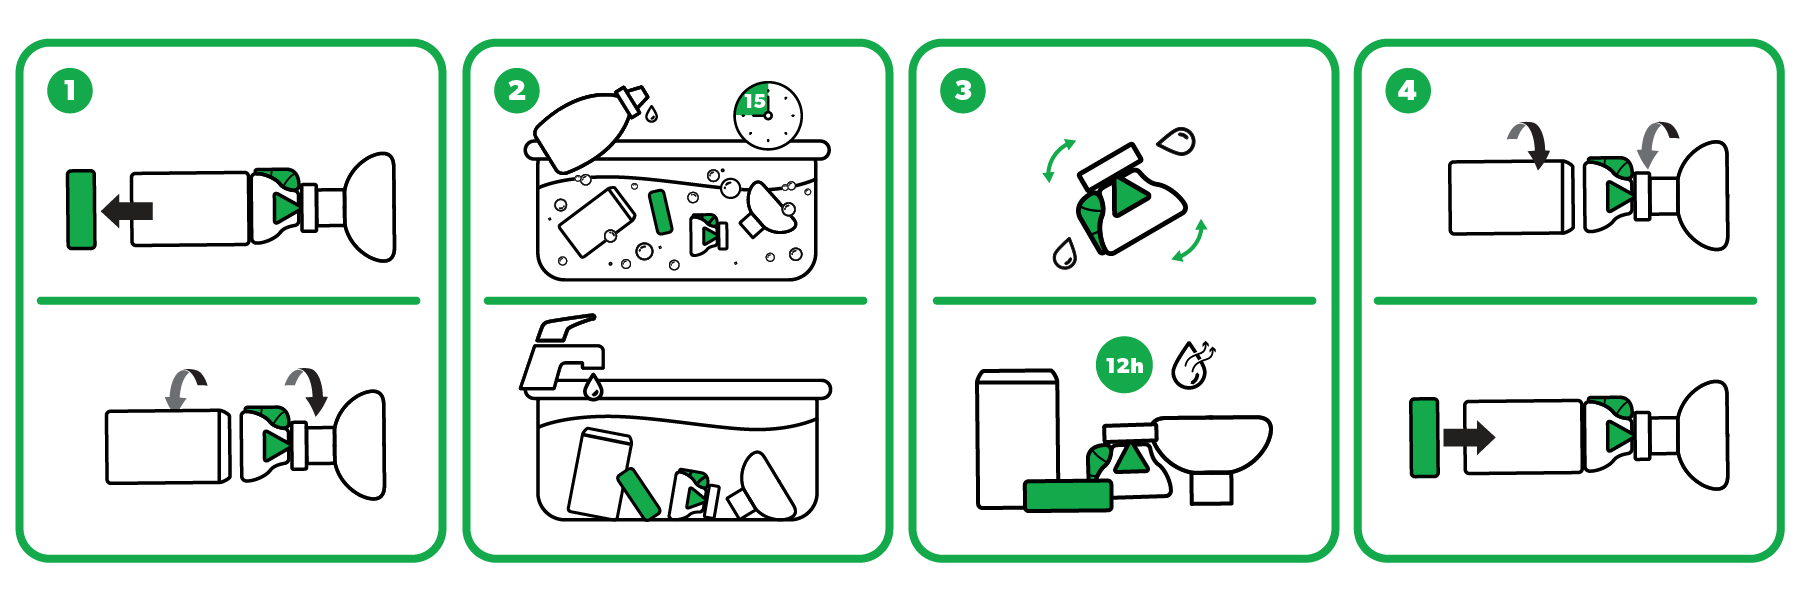 How to clean AeroHippus* illustration